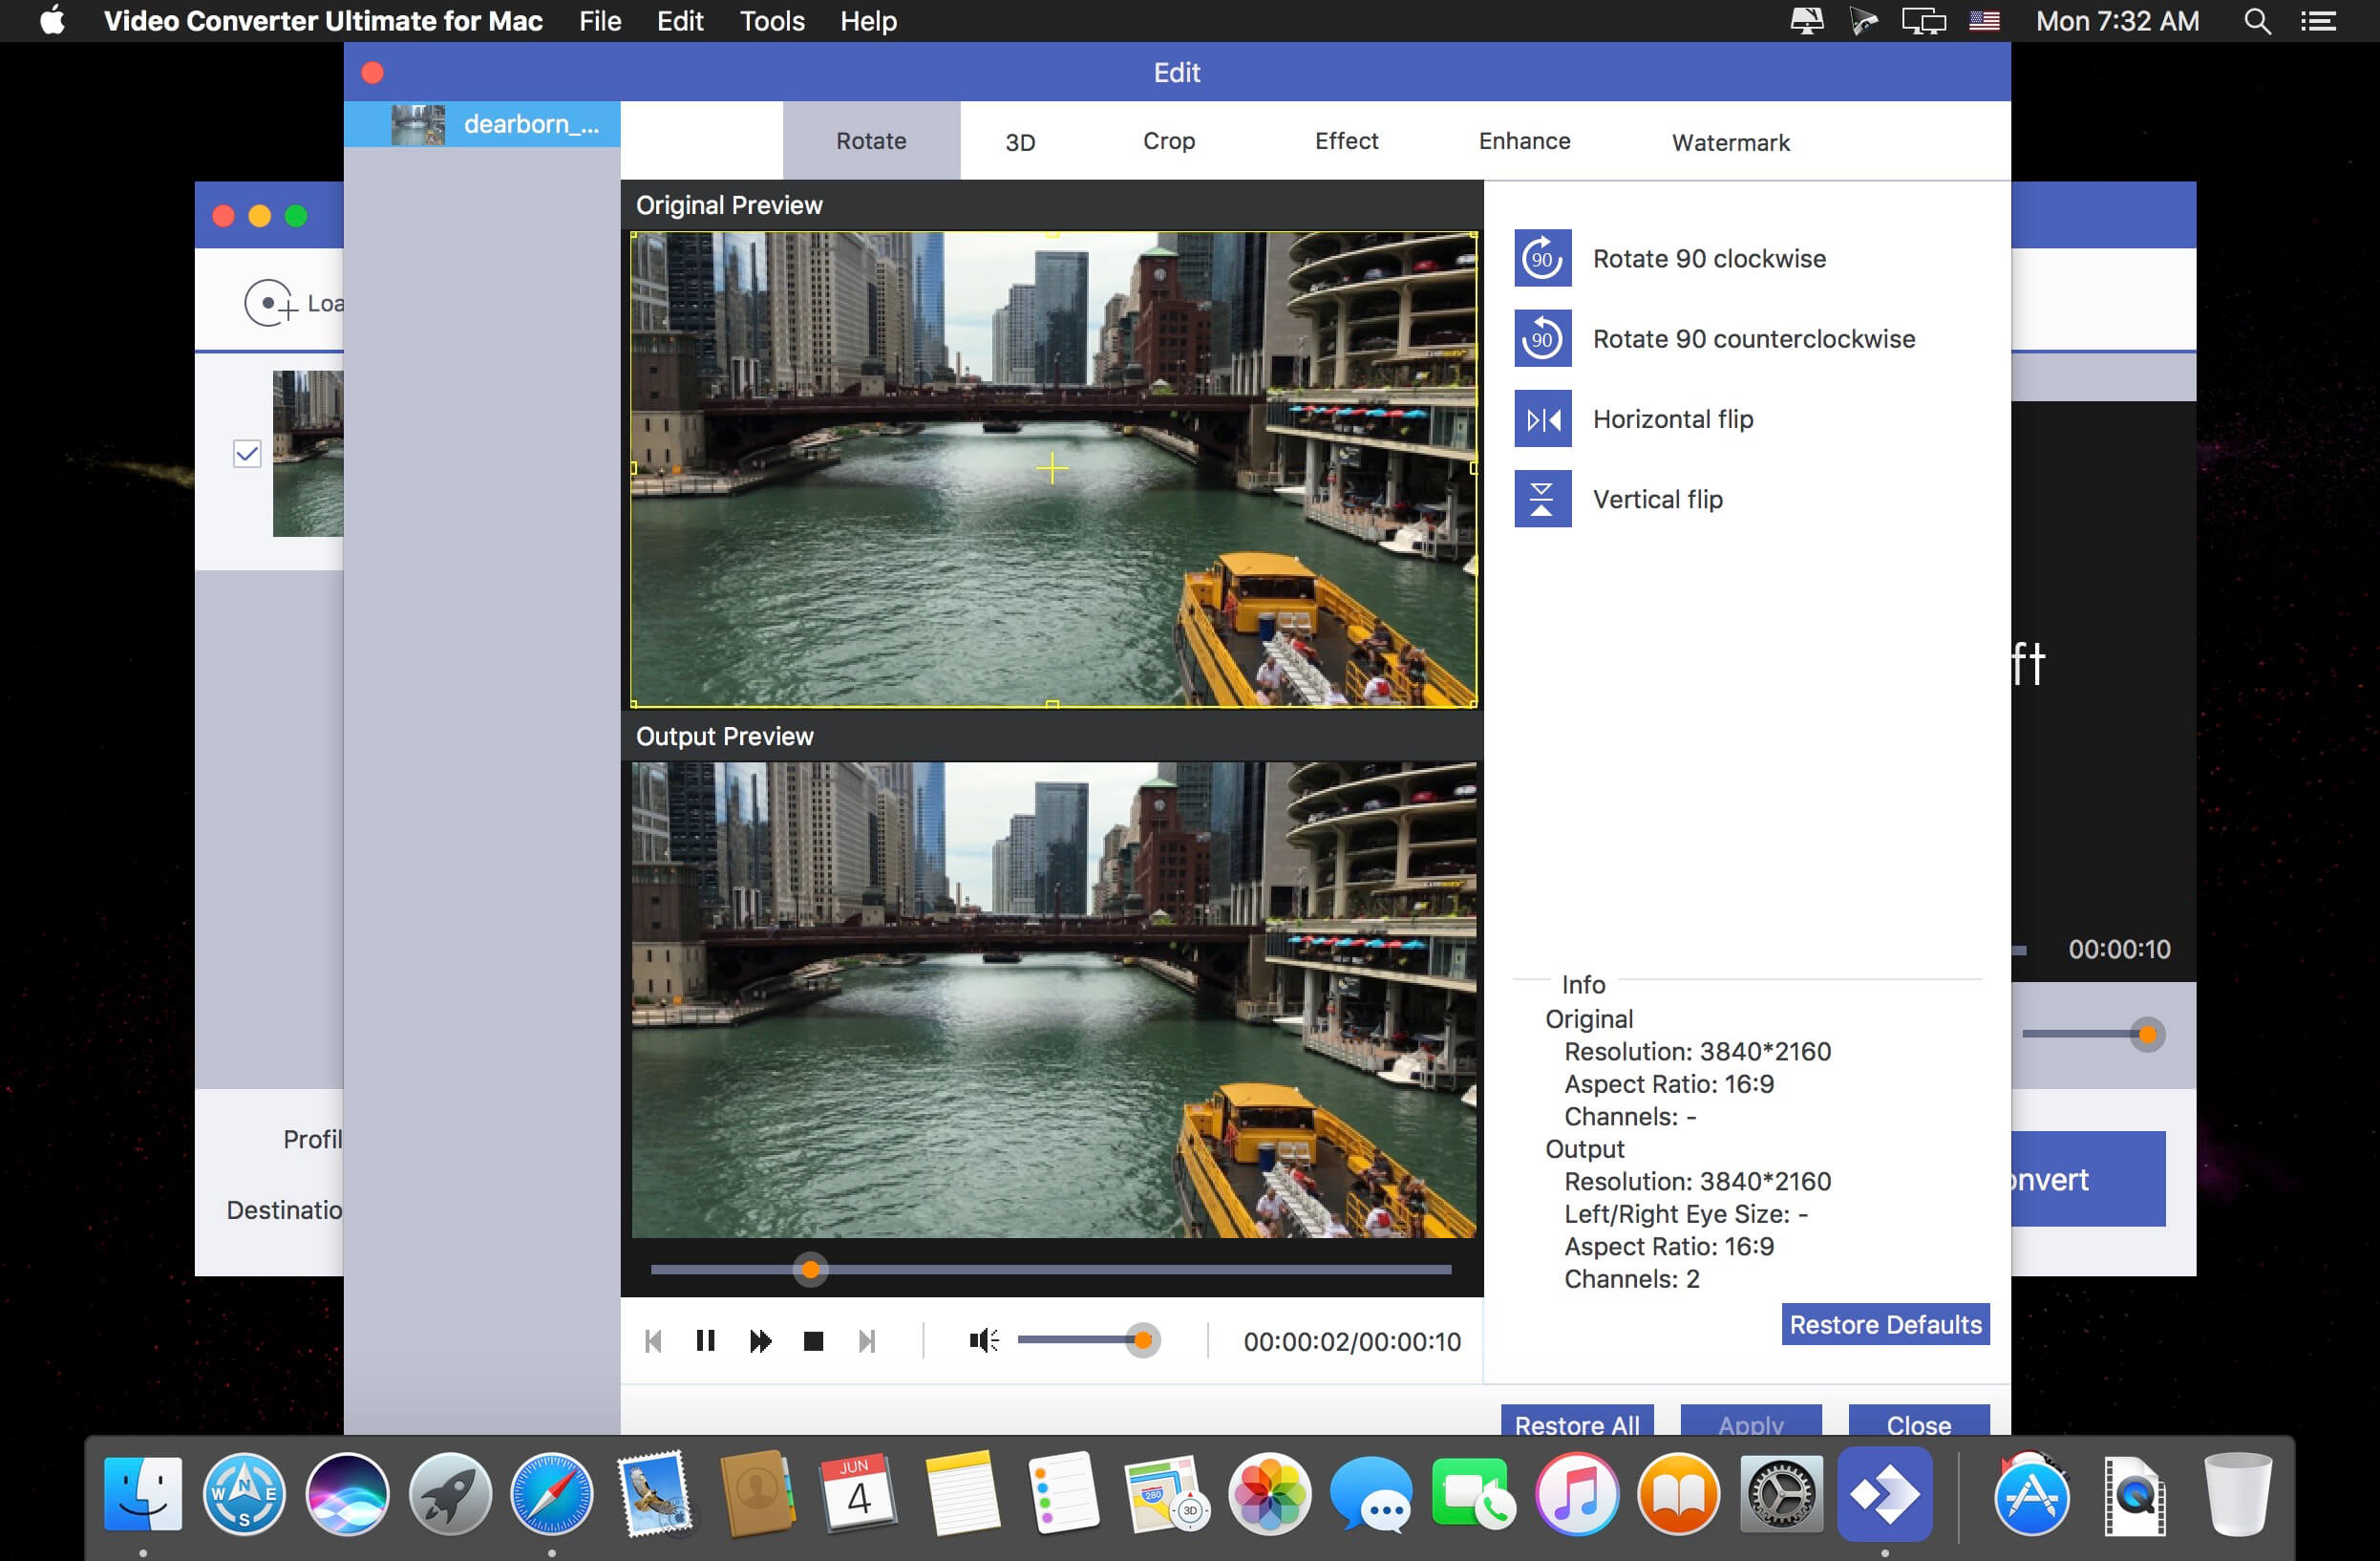 Apeaksoft Video Converter Ultimate 2.3.32 download the last version for apple